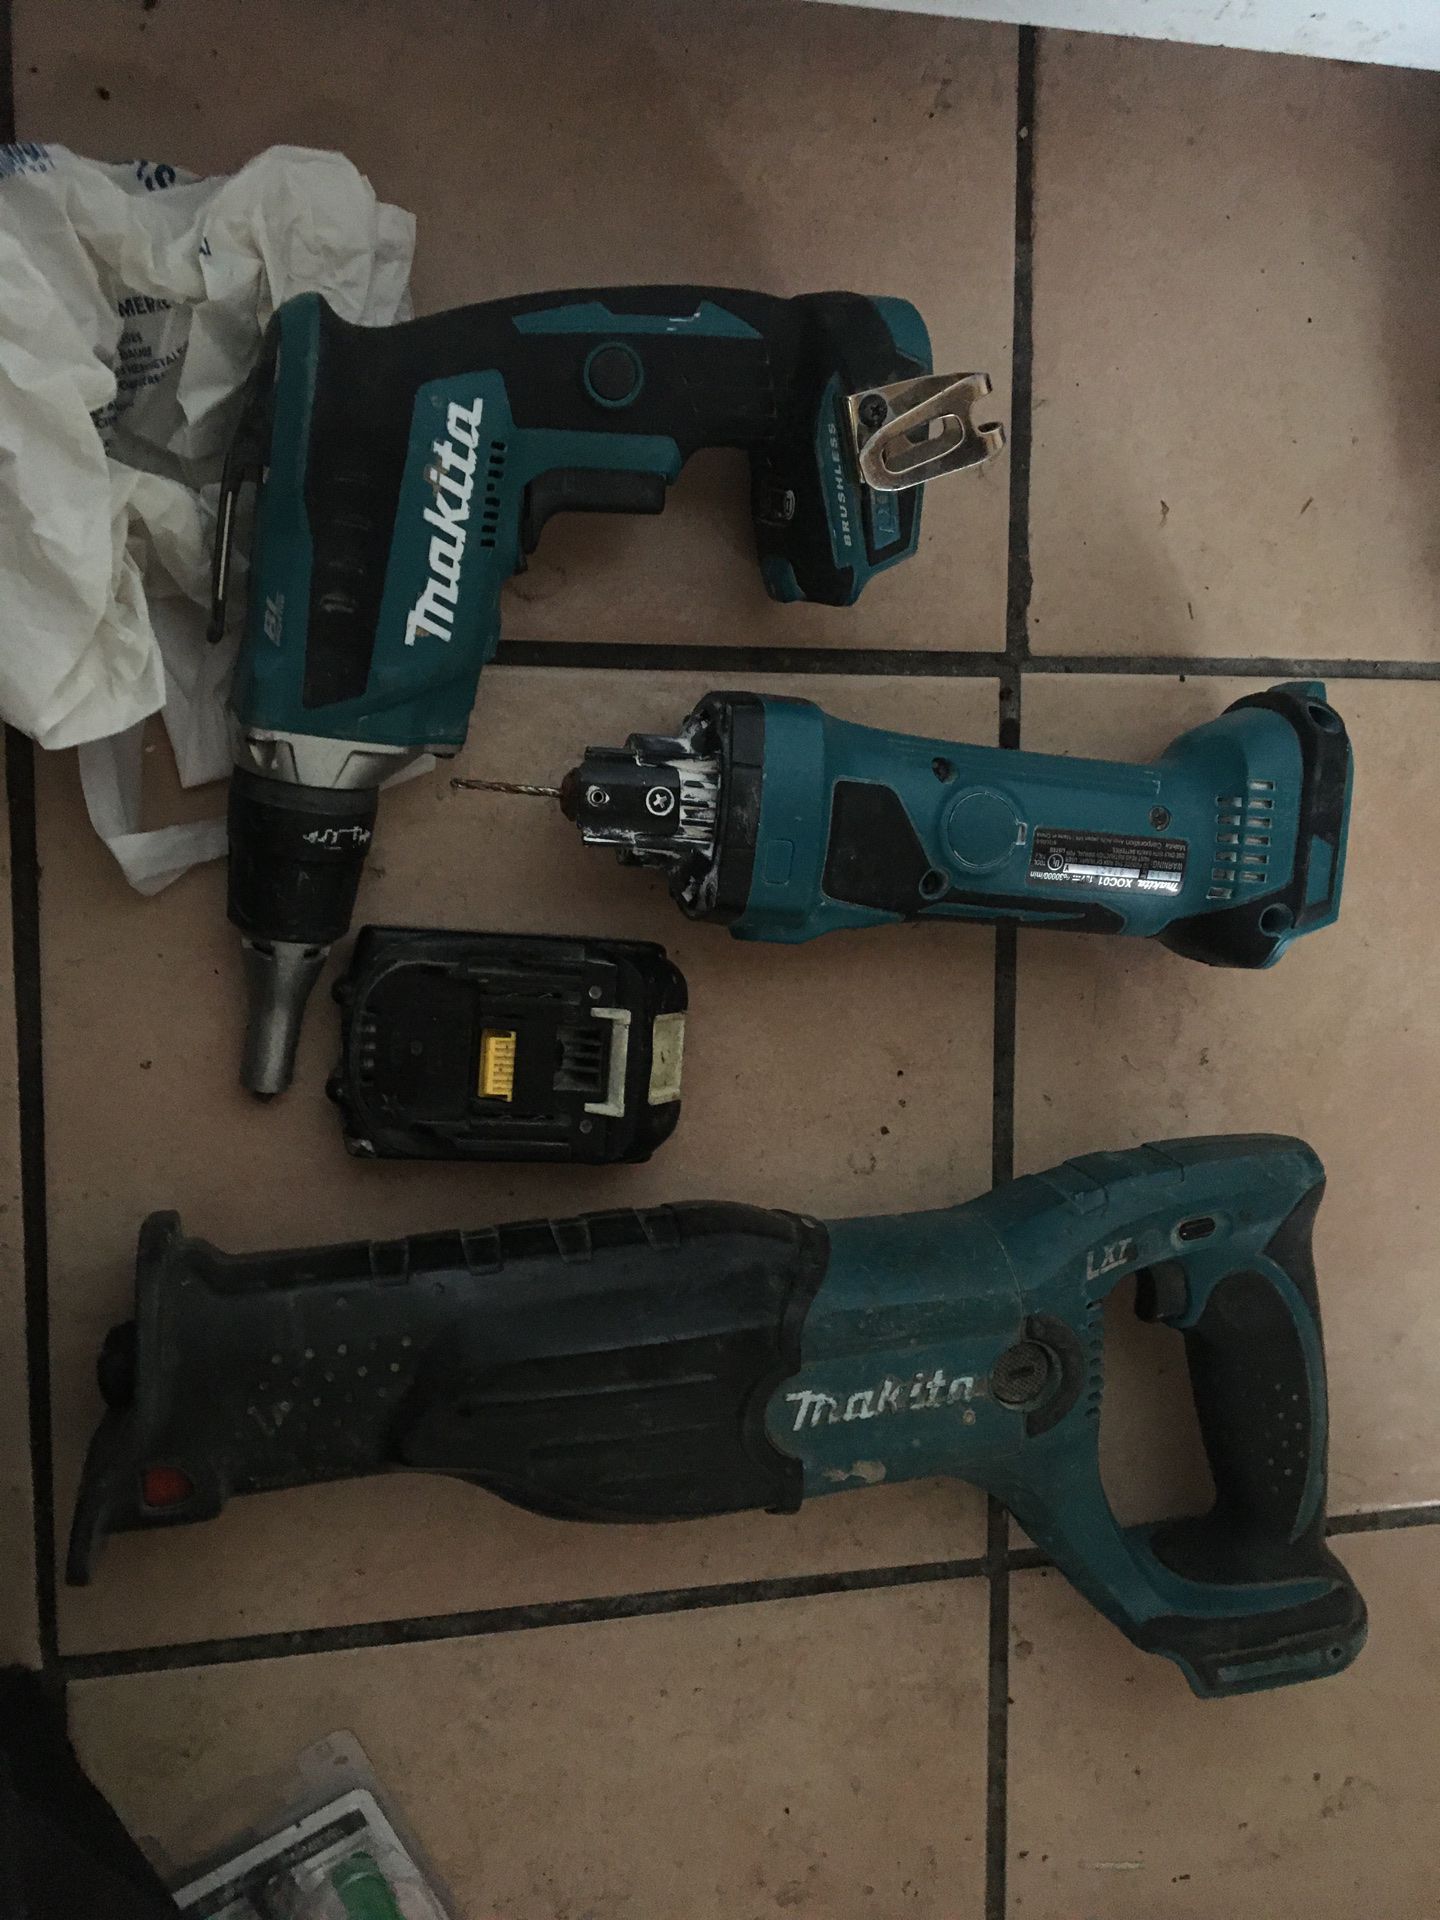 Makita power tools